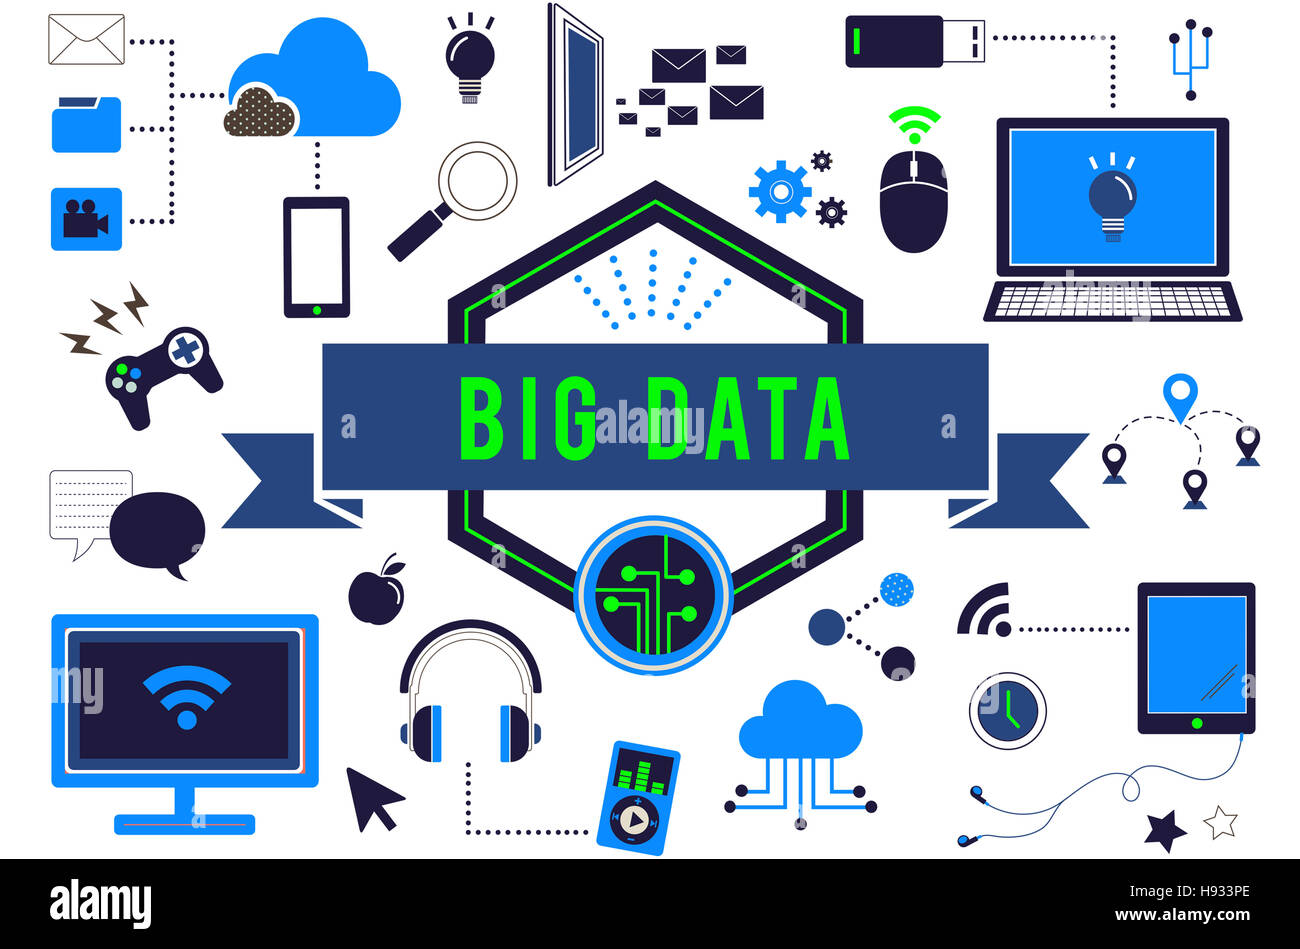 Big Data Computer Network Technology Concept Stock Photo